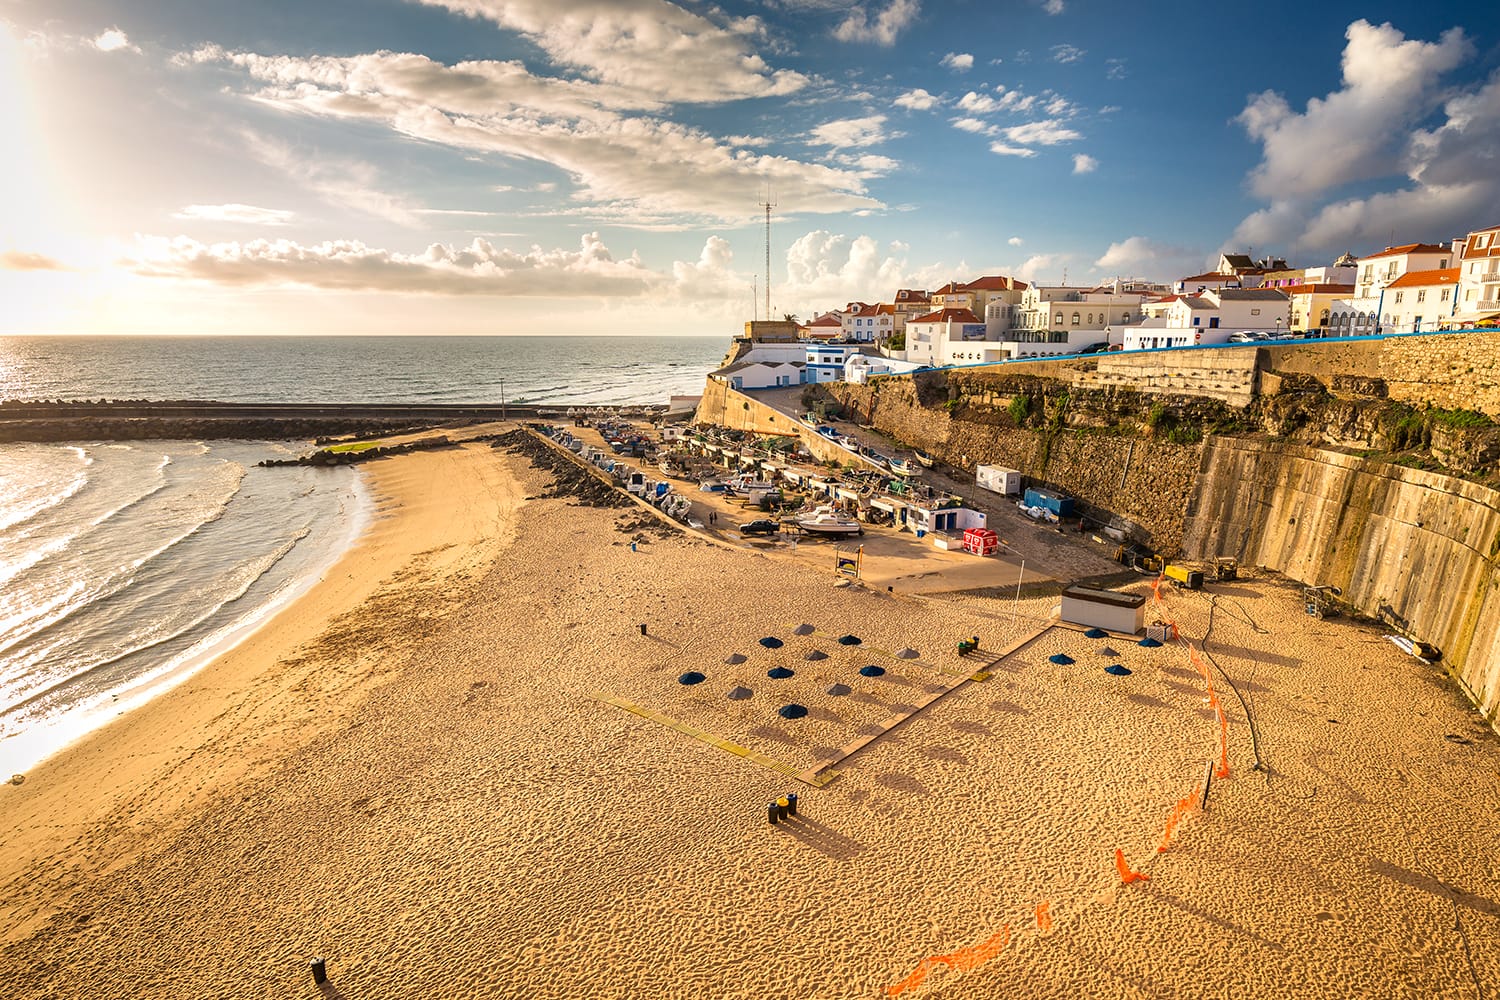 The popular beach town Ericeira, Portugal